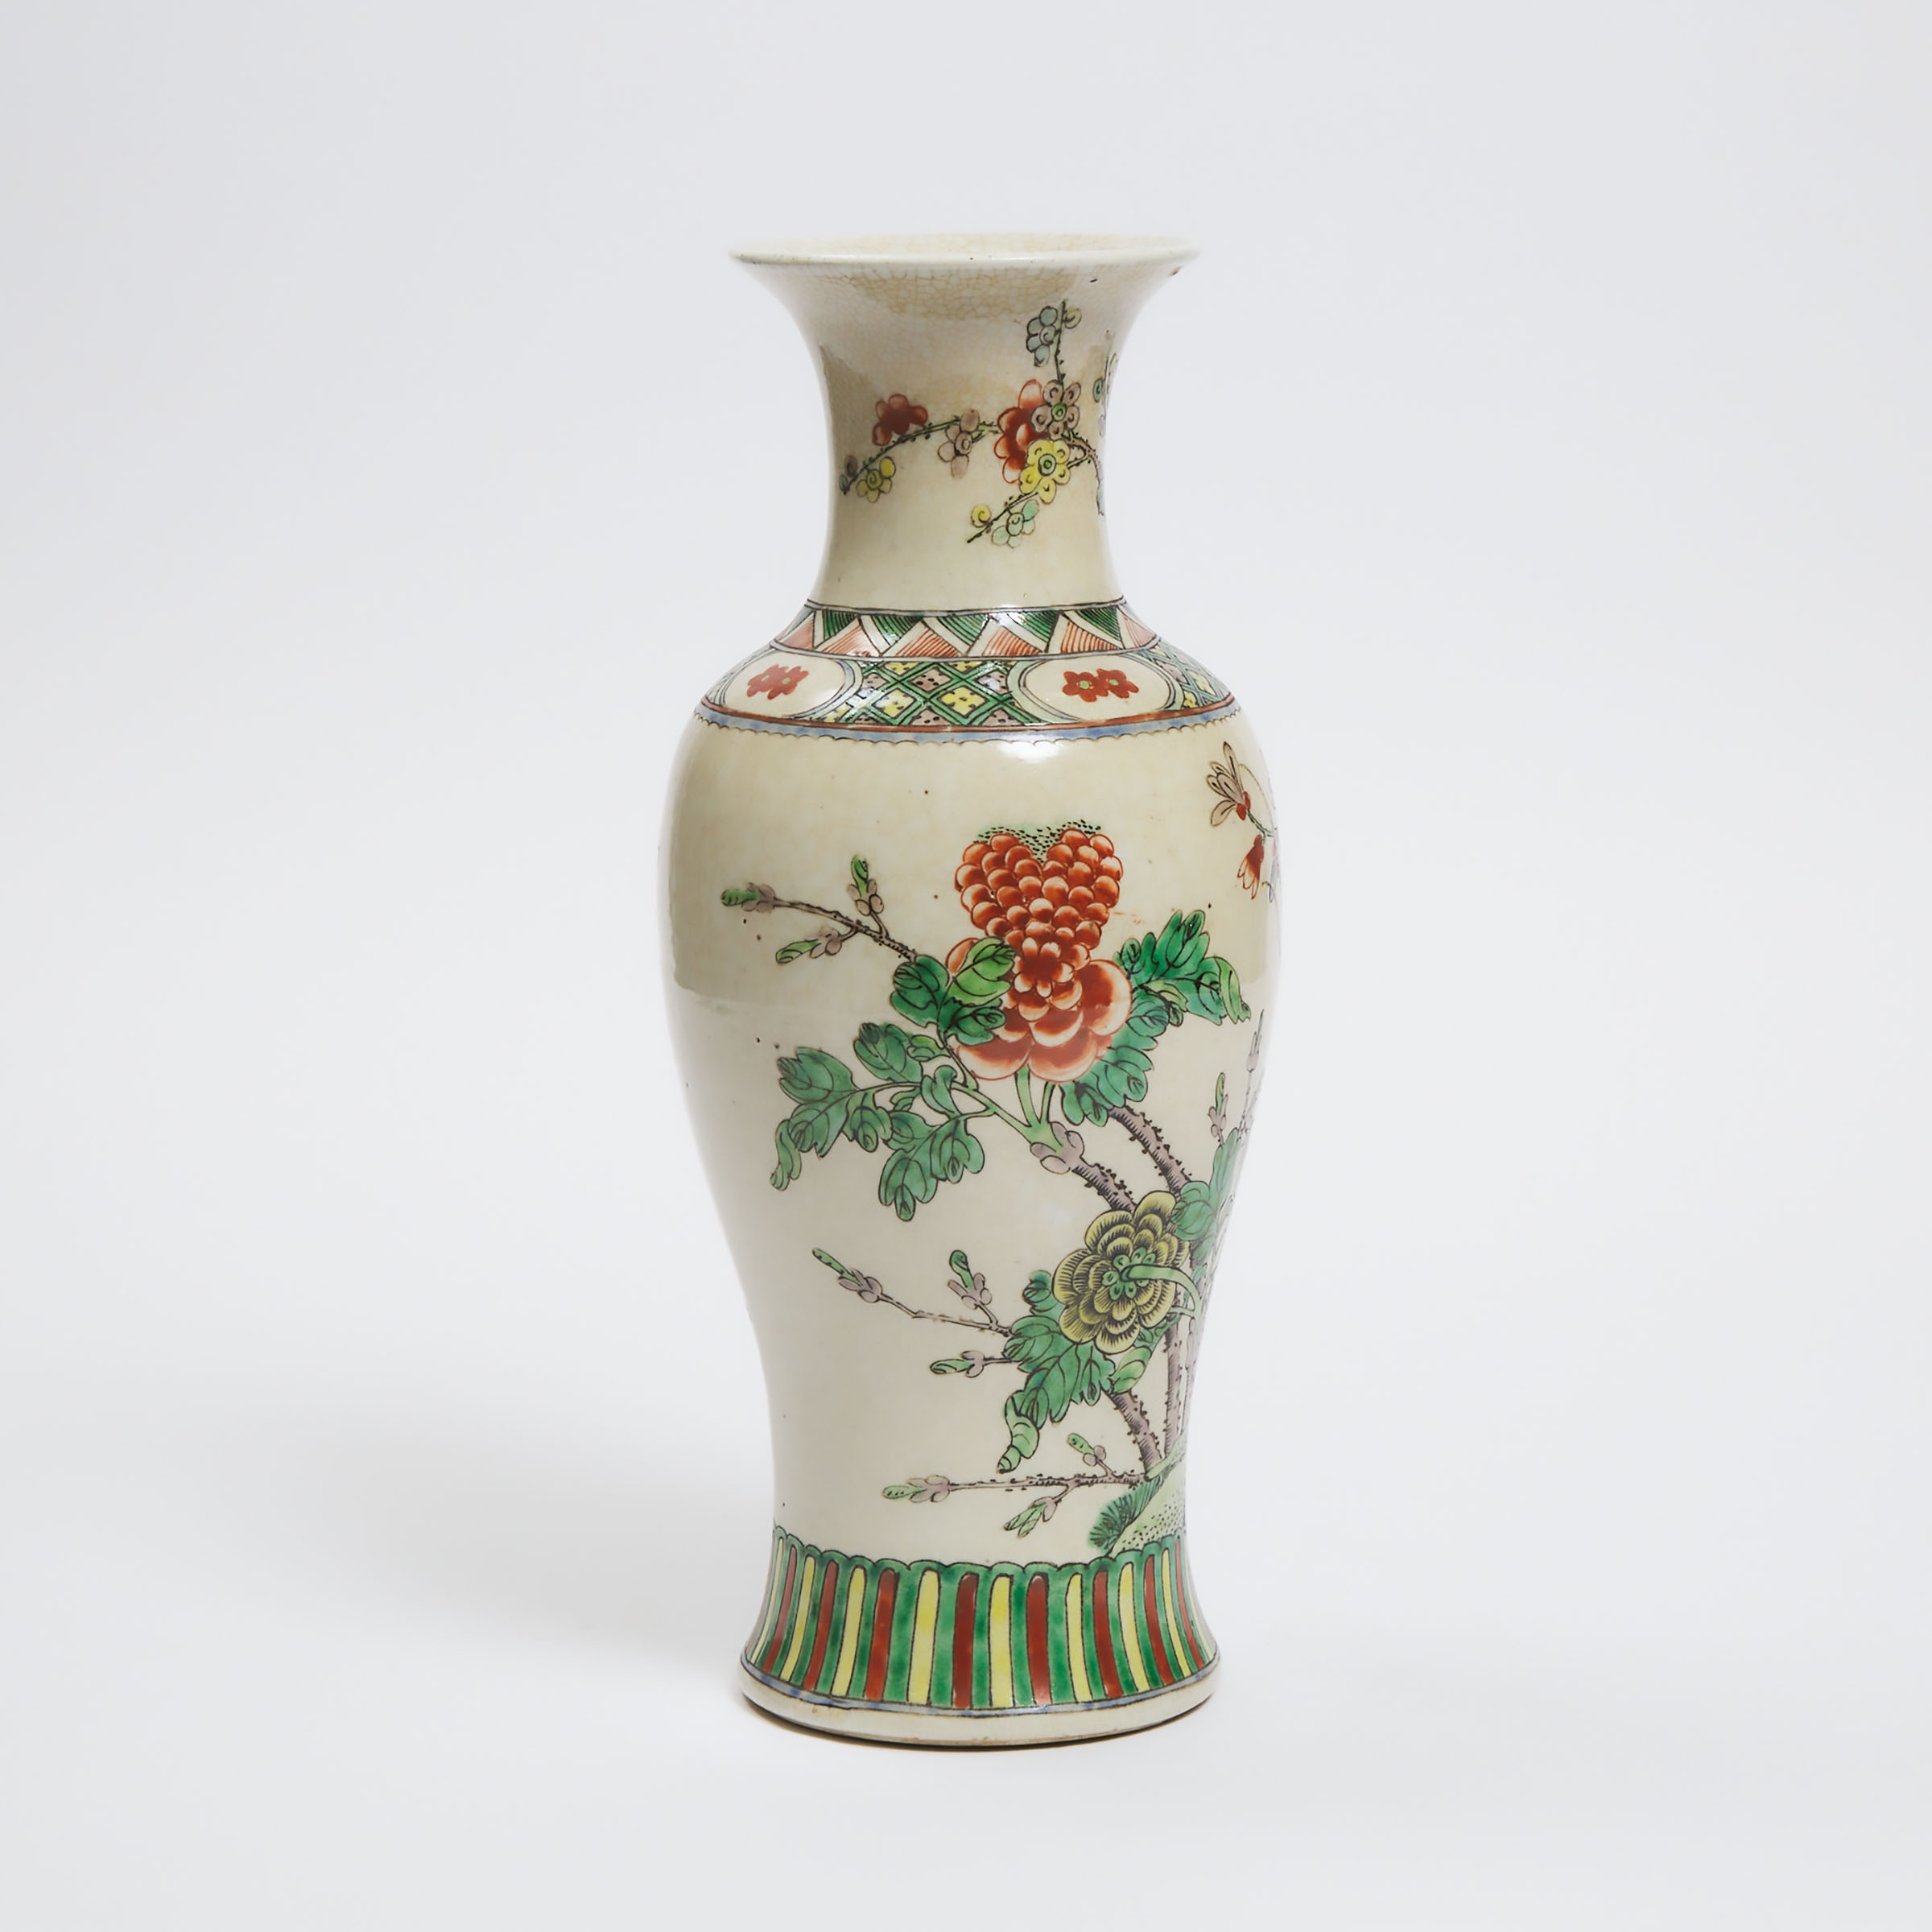 A Chinese Polychrome Enameled Crackled Glaze Vase, 19th/20th Century